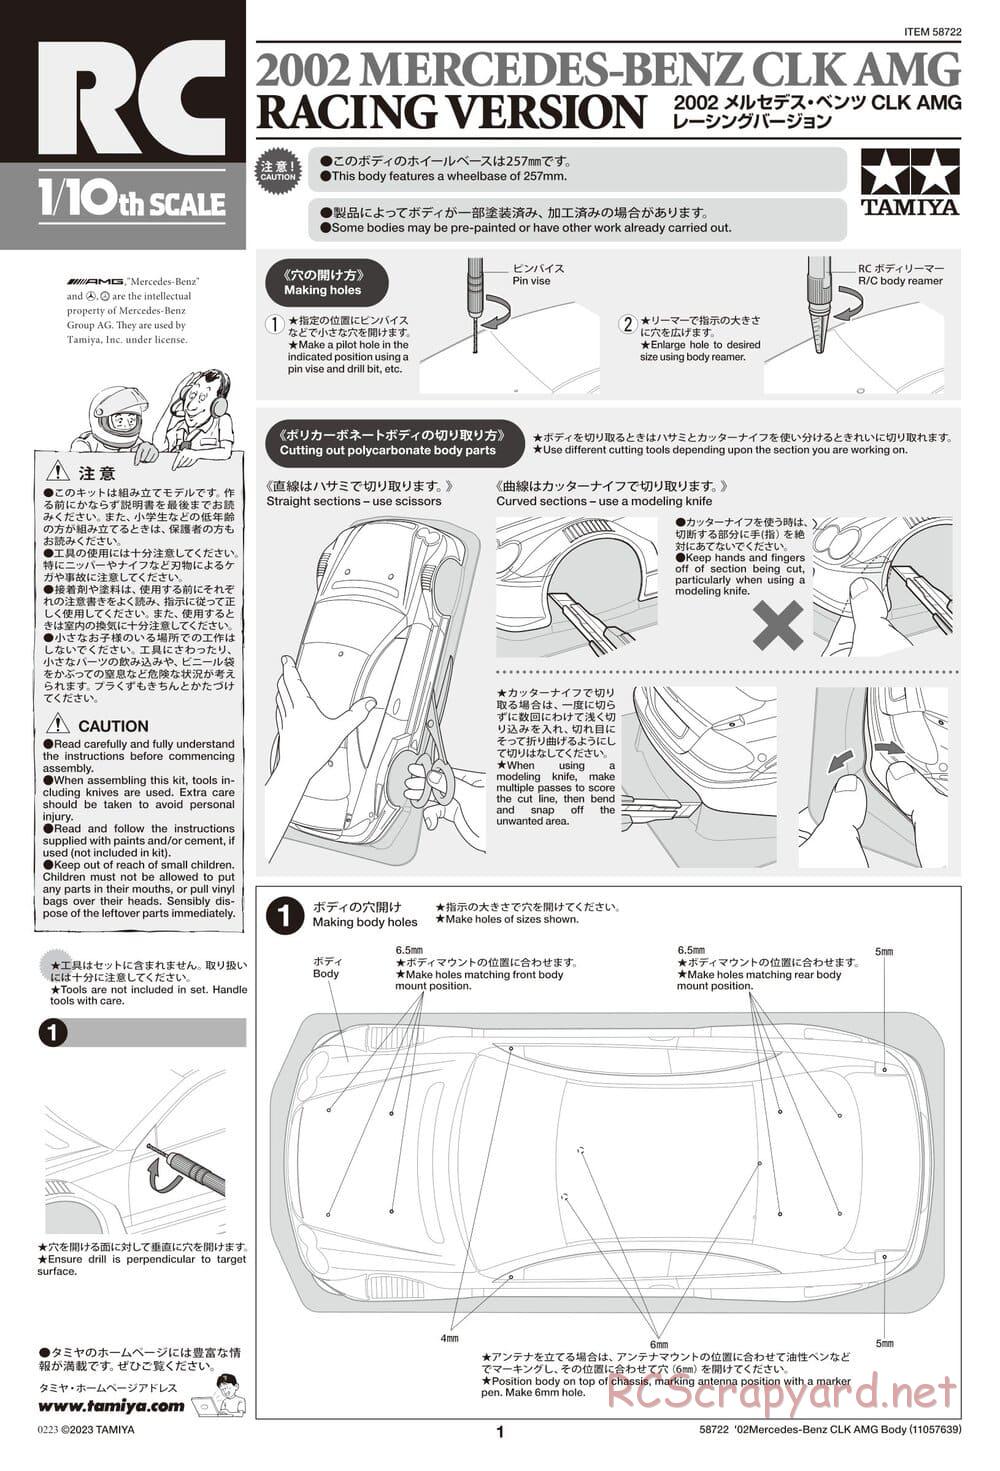 Tamiya - 2002 Mercedes-Benz CLK AMG Racing Version - TT-02 Chassis - Body Manual - Page 1